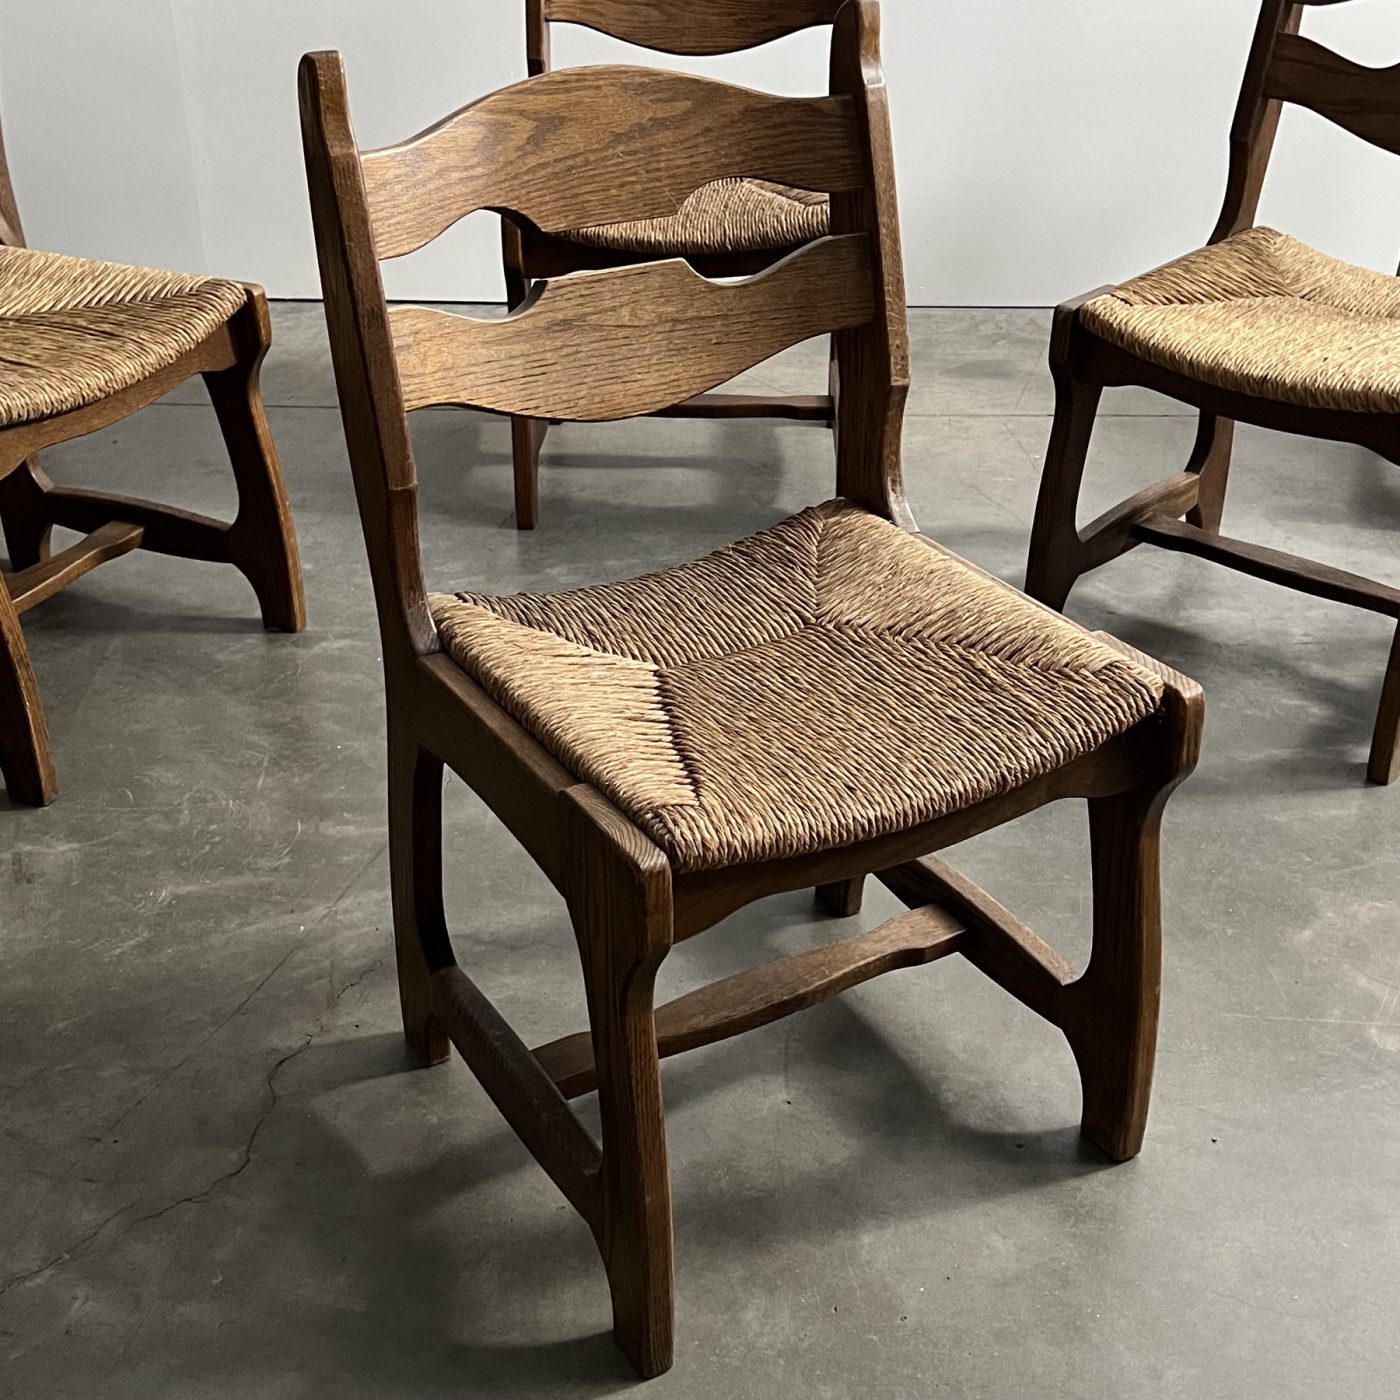 objet-vagabond-oak-chairs0008